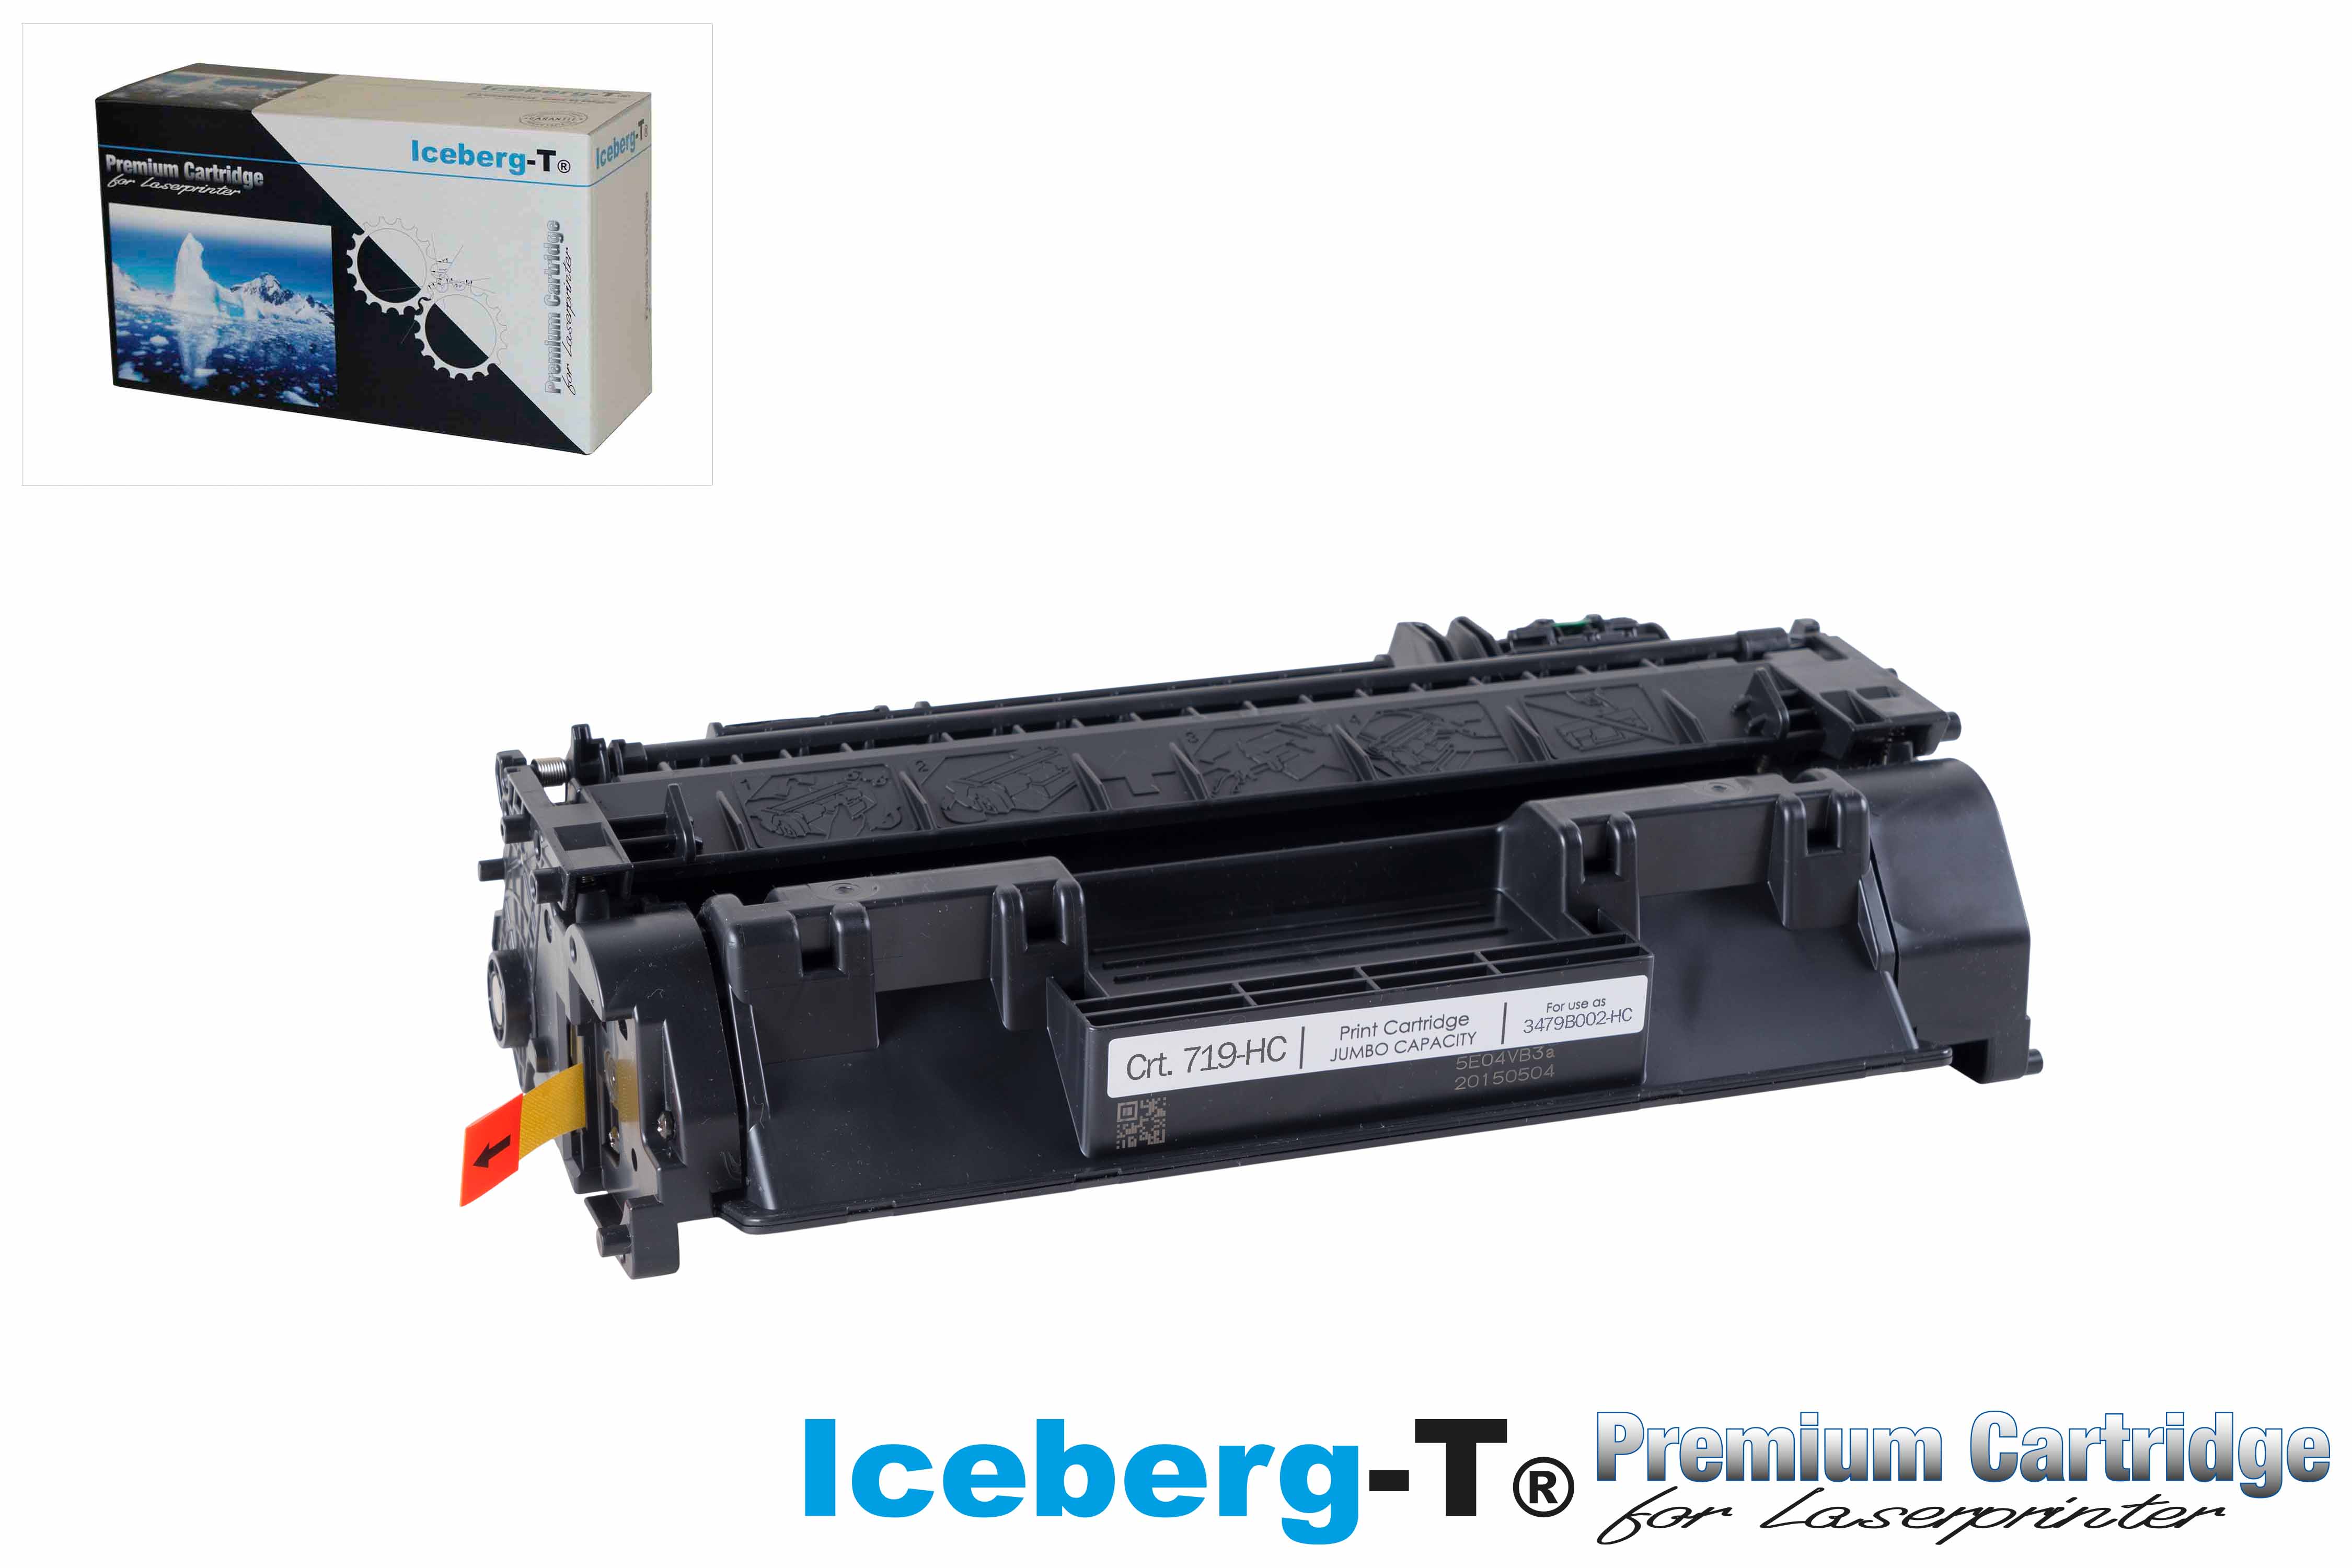 Iceberg-T Toner Crt. 719-HC 4'000 Seiten, schwarz